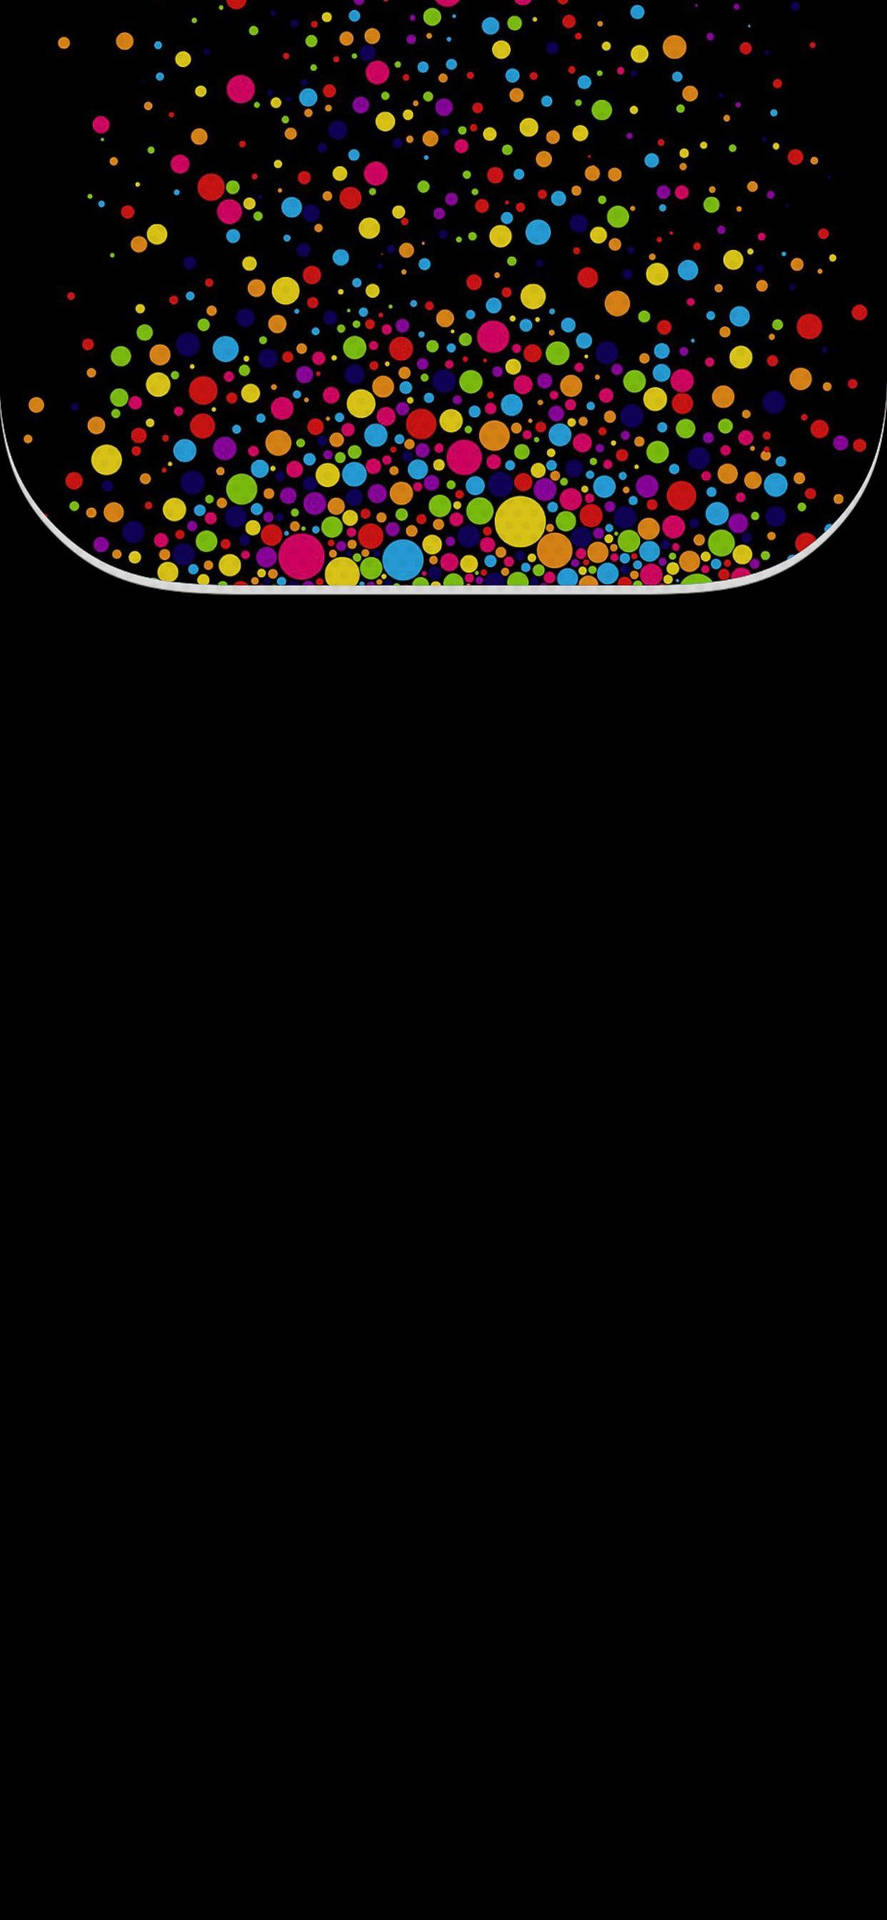 iOS 15 Colorful Dots Wallpaper